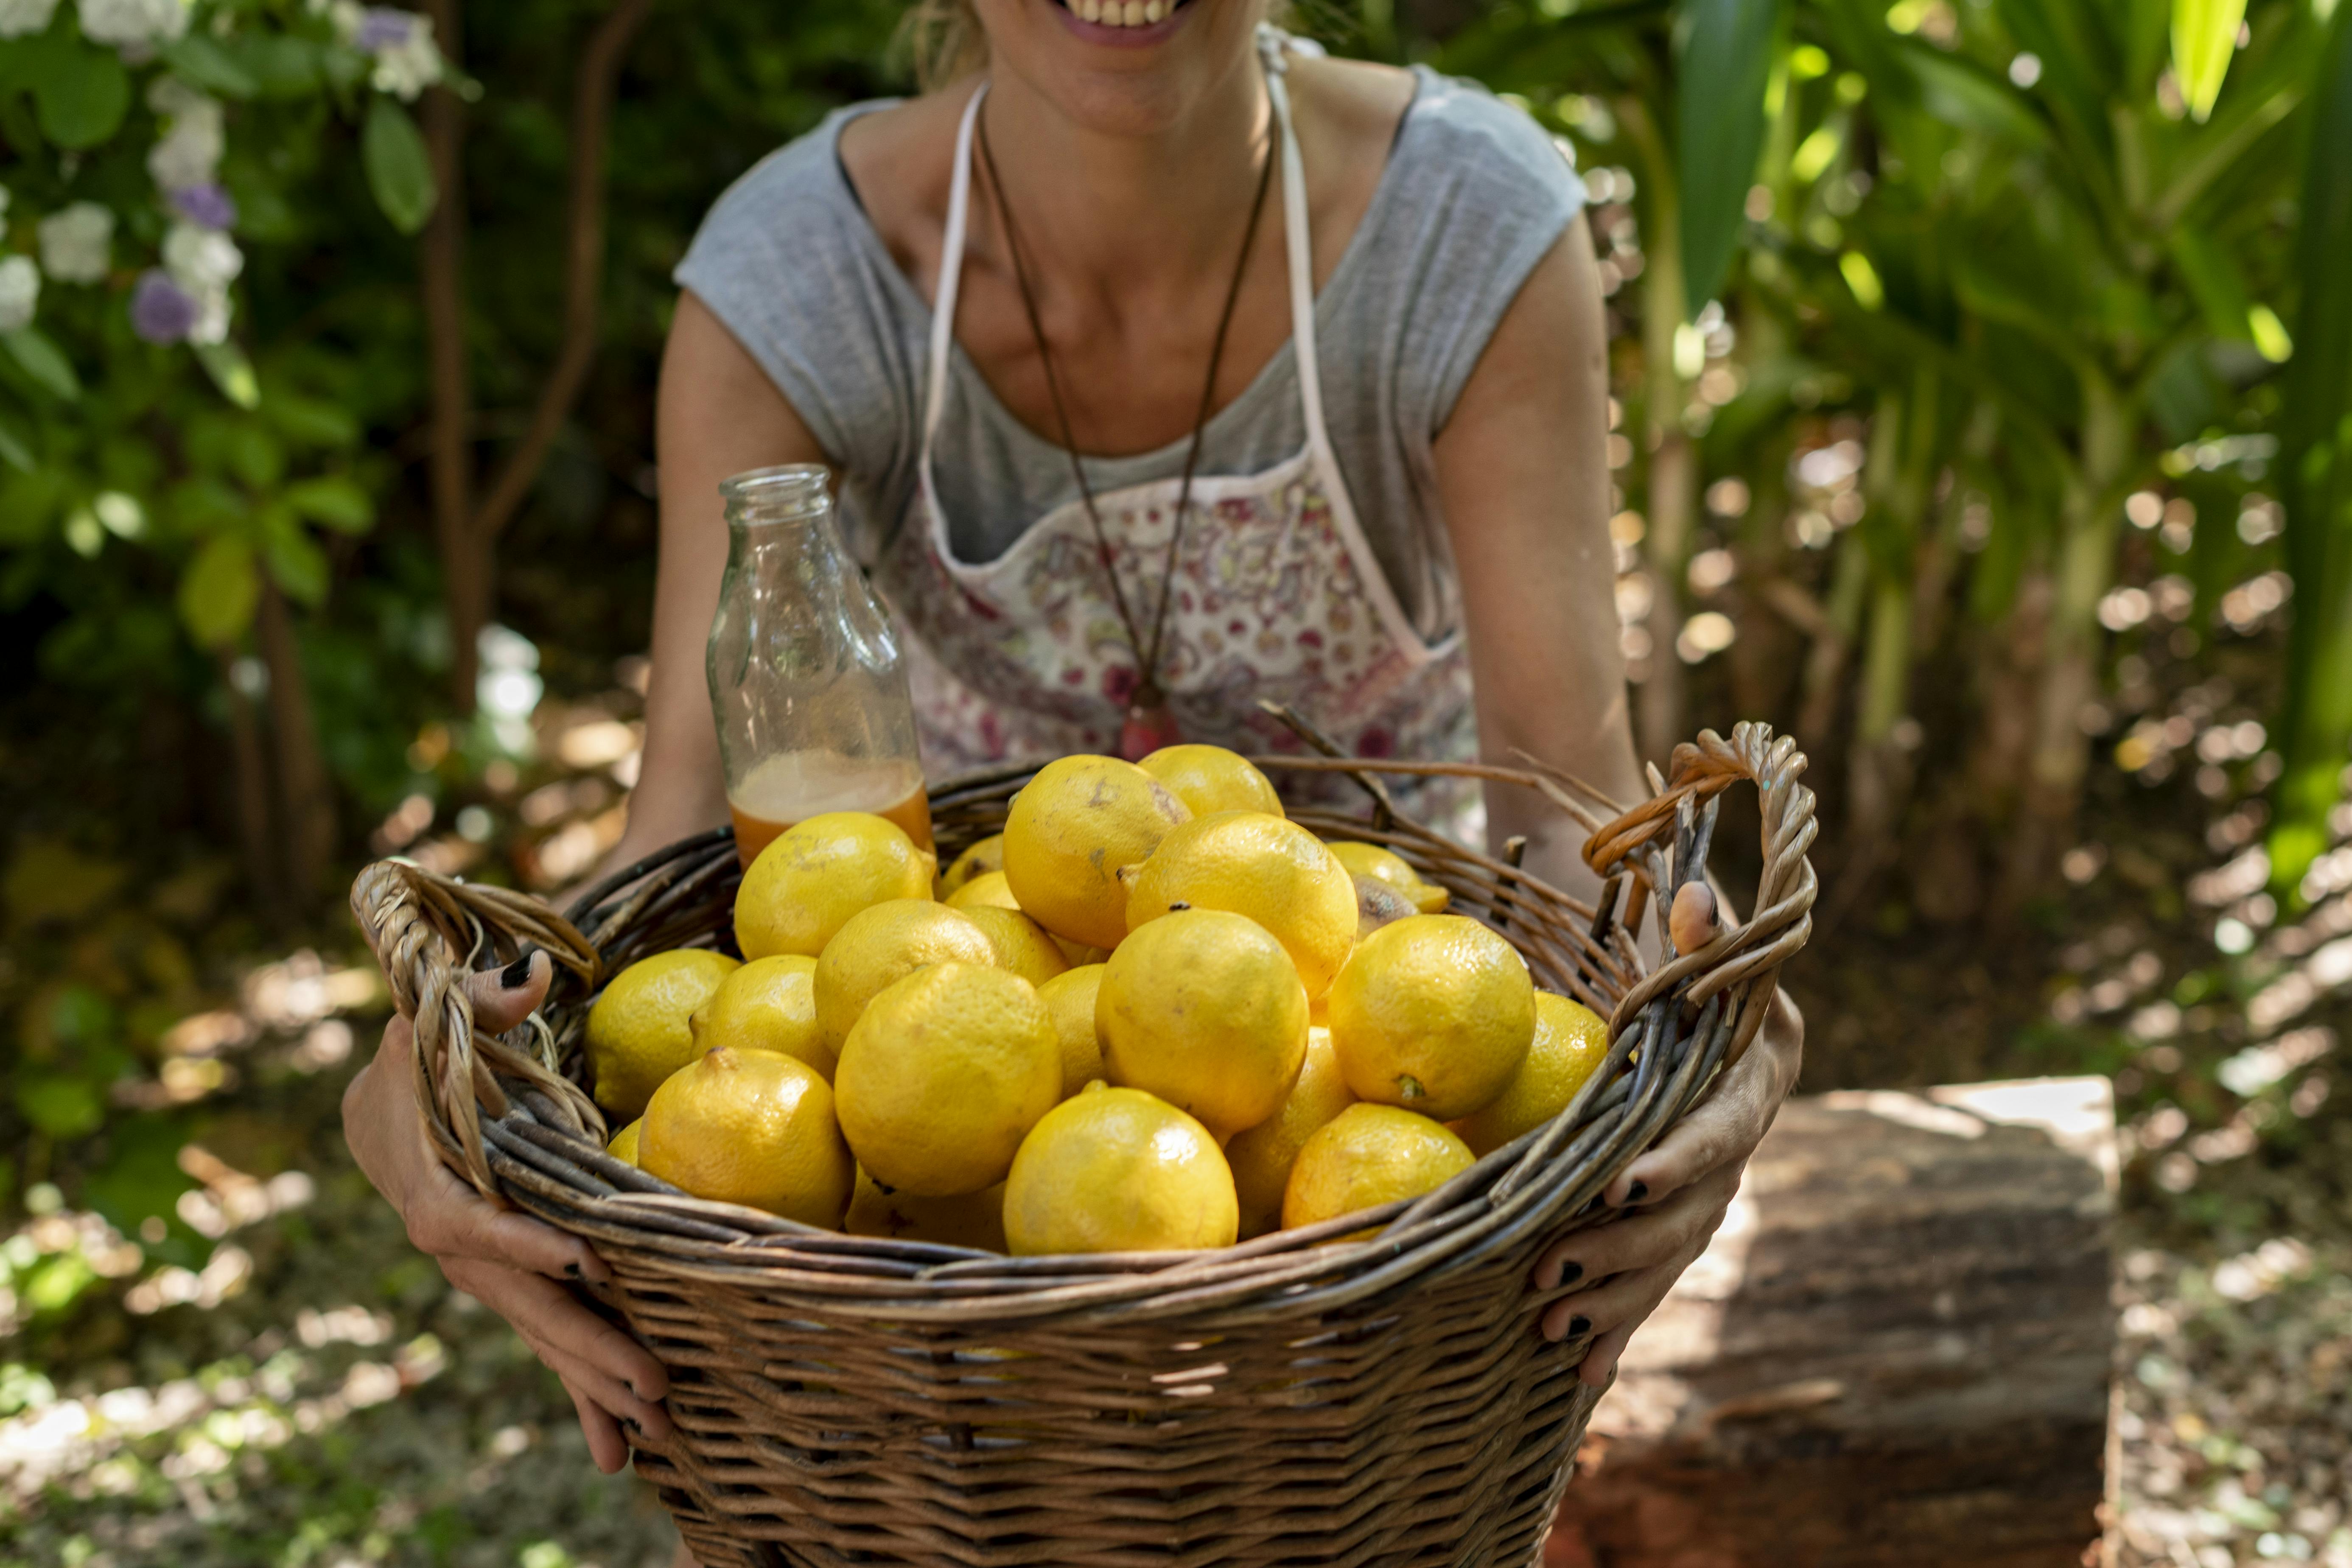 A woman holding a basket full of lemons